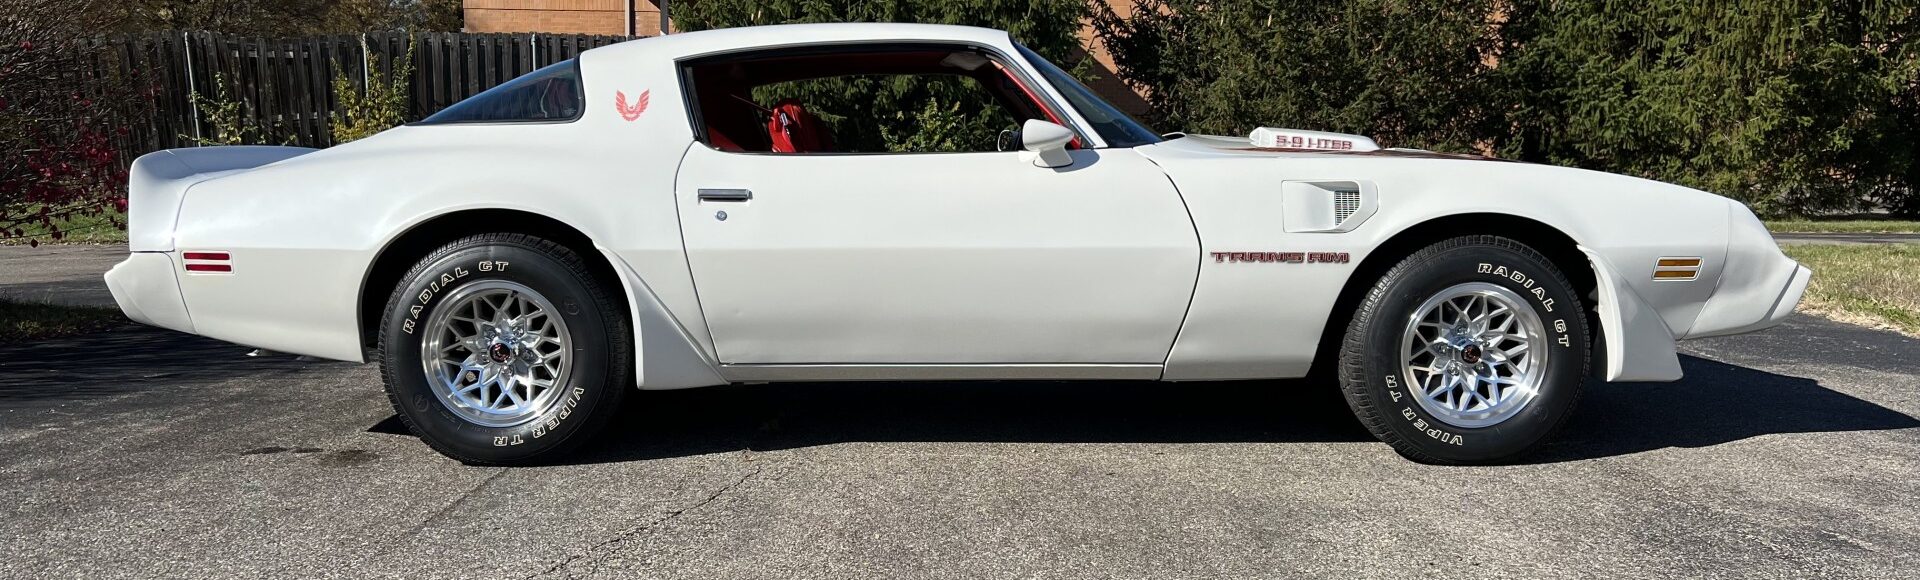 1981 Pontiac TA, 305 Auto, Custom Paint, 24K Miles, $34,900